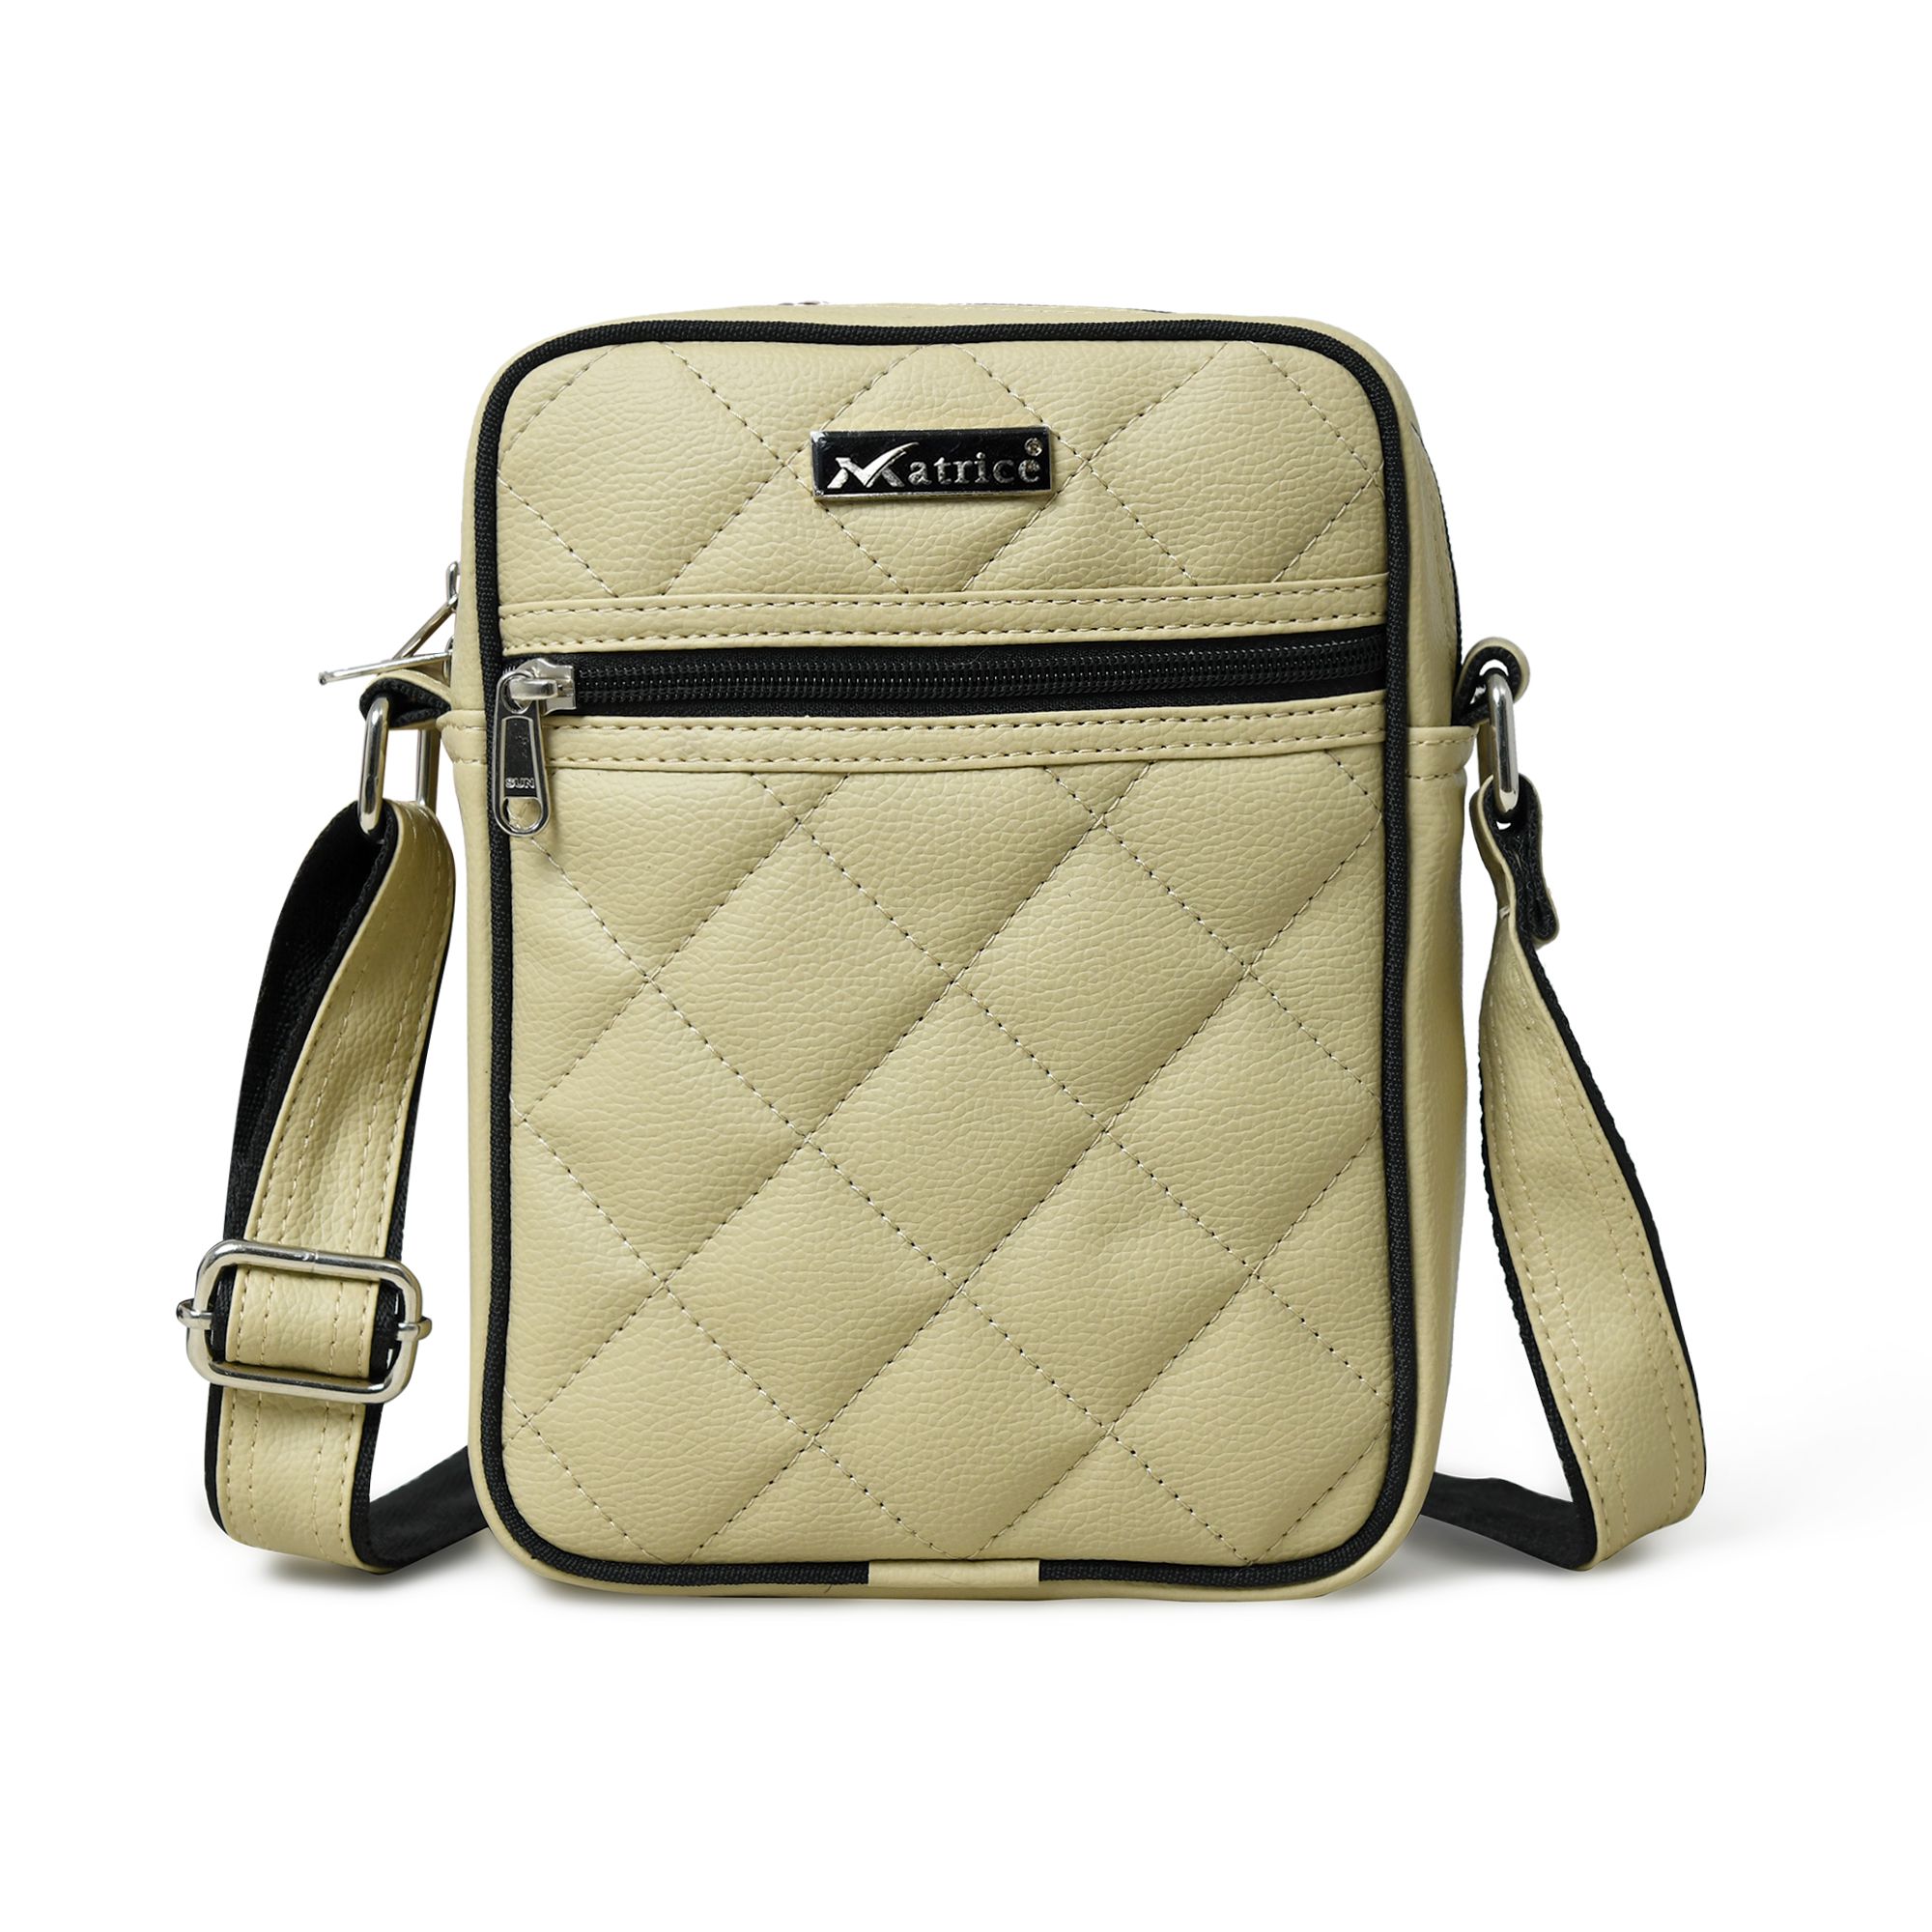     			MATRICE Cream PU Shoulder Bag